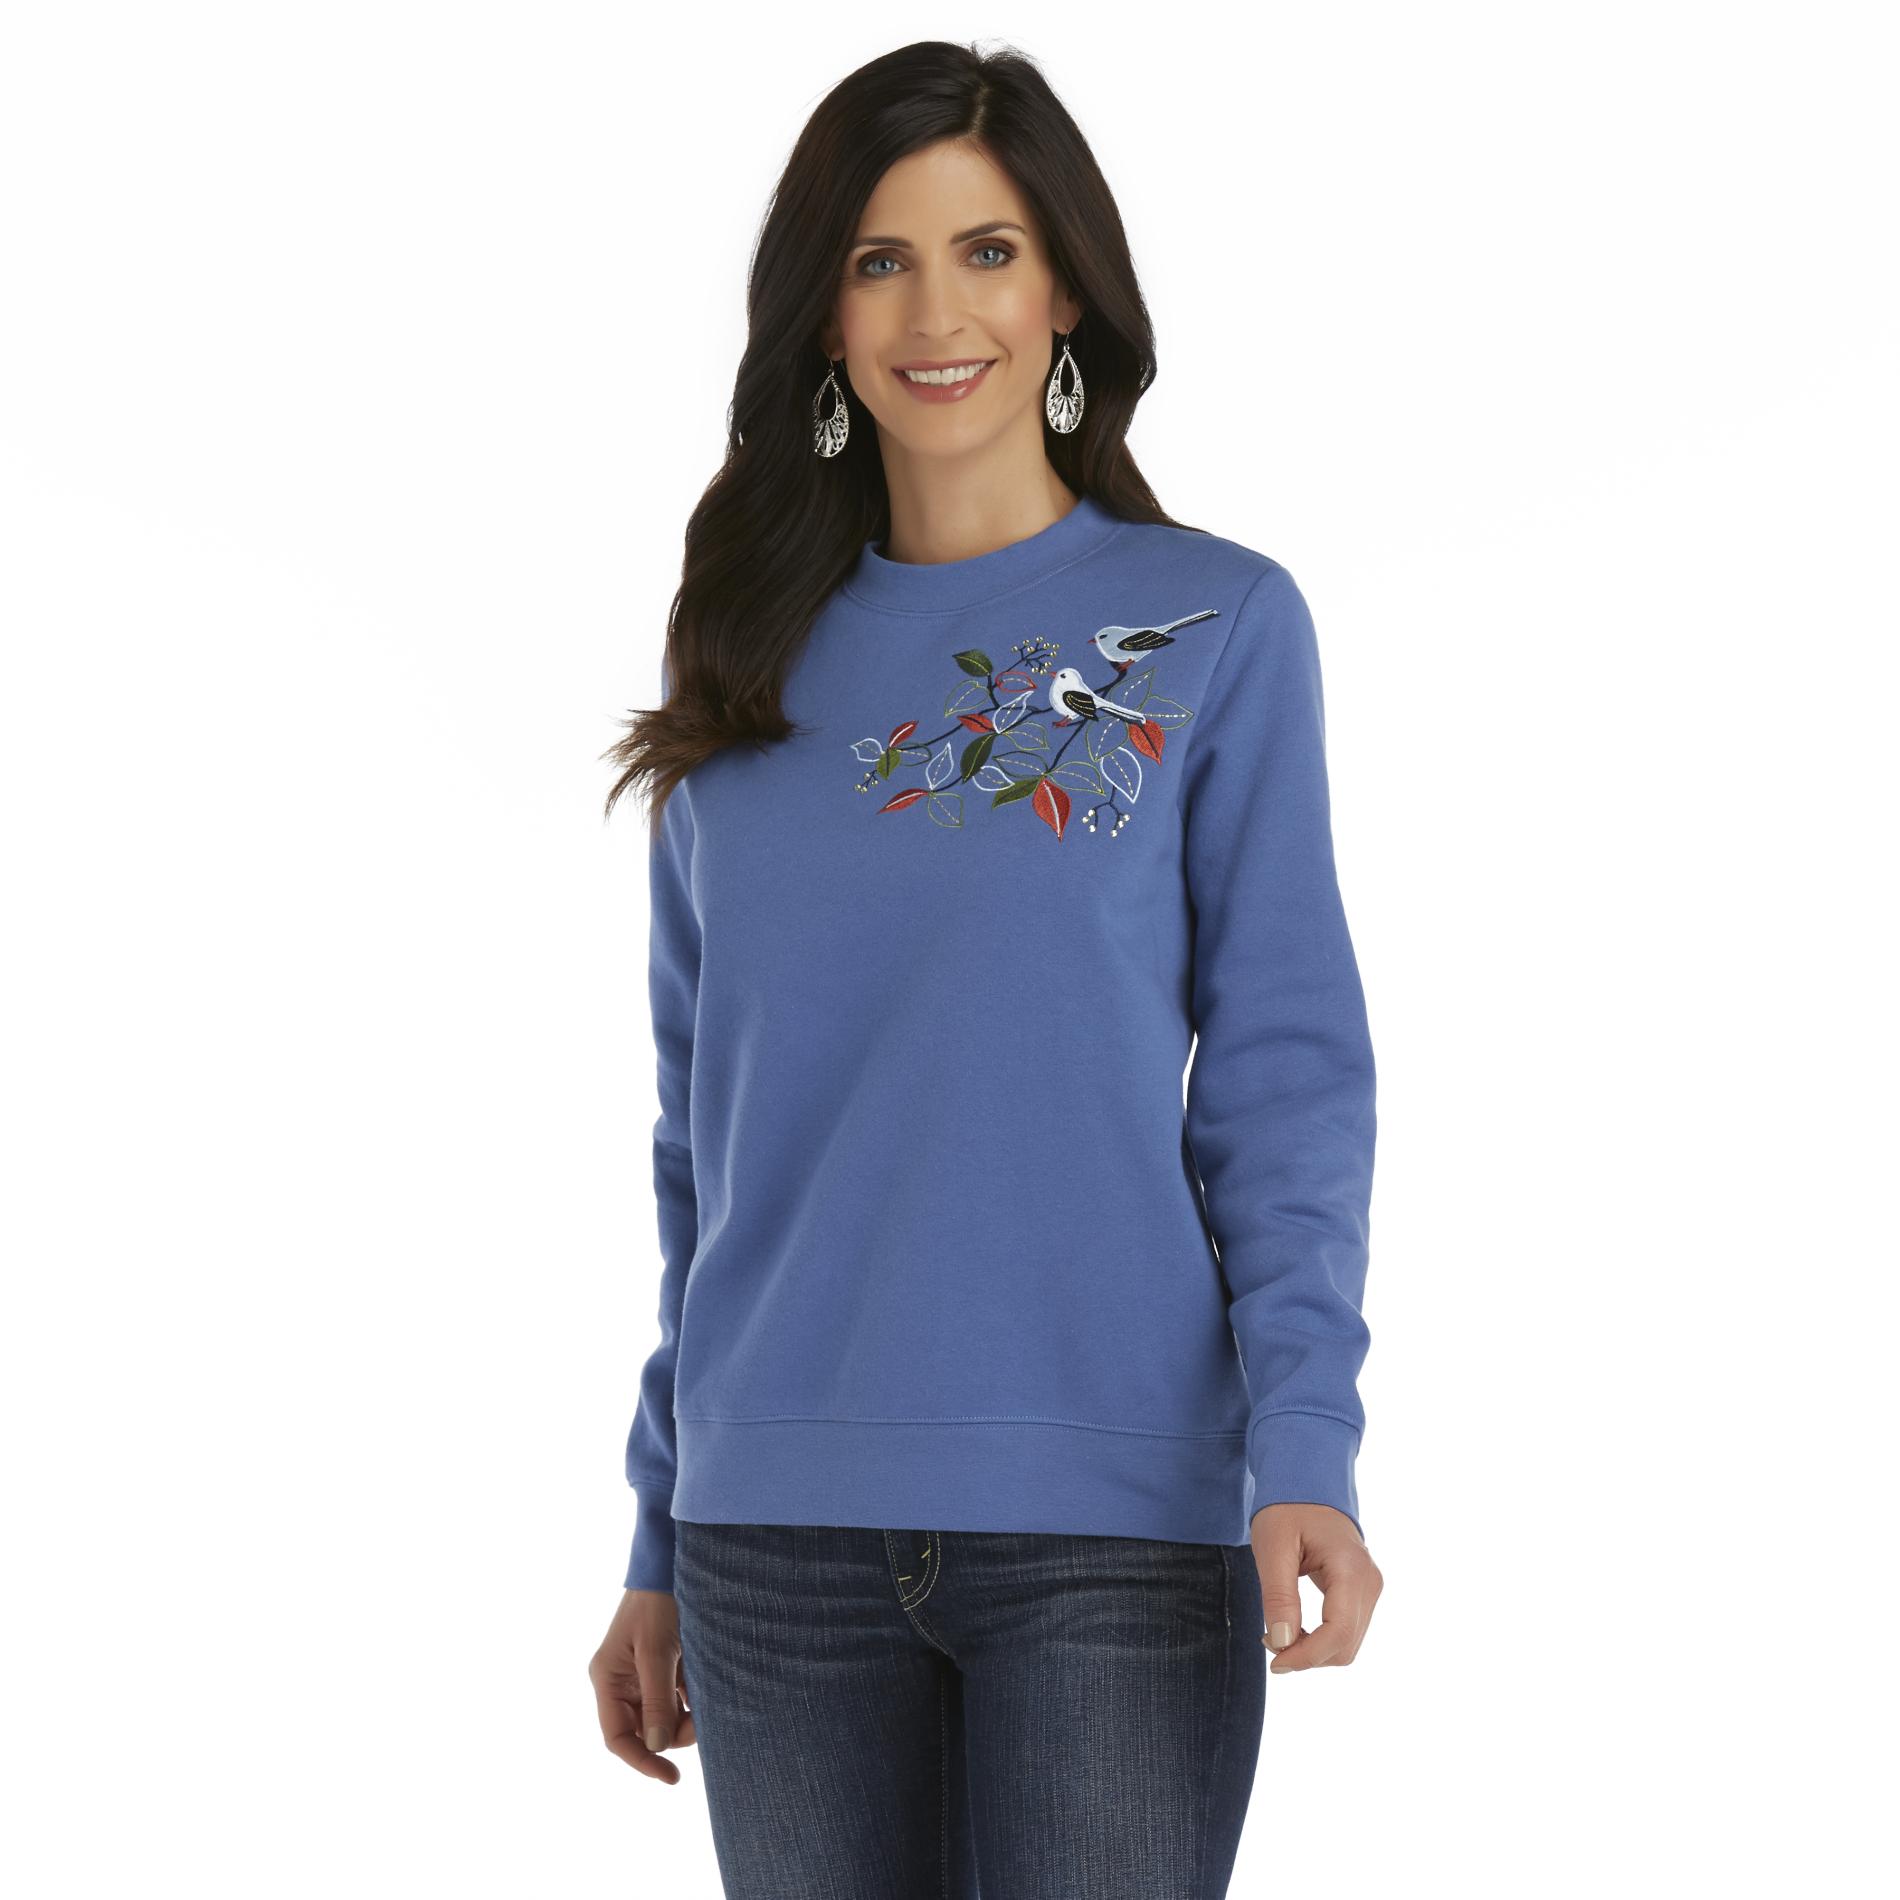 Basic Editions Women's Embellished Sweatshirt - Birds